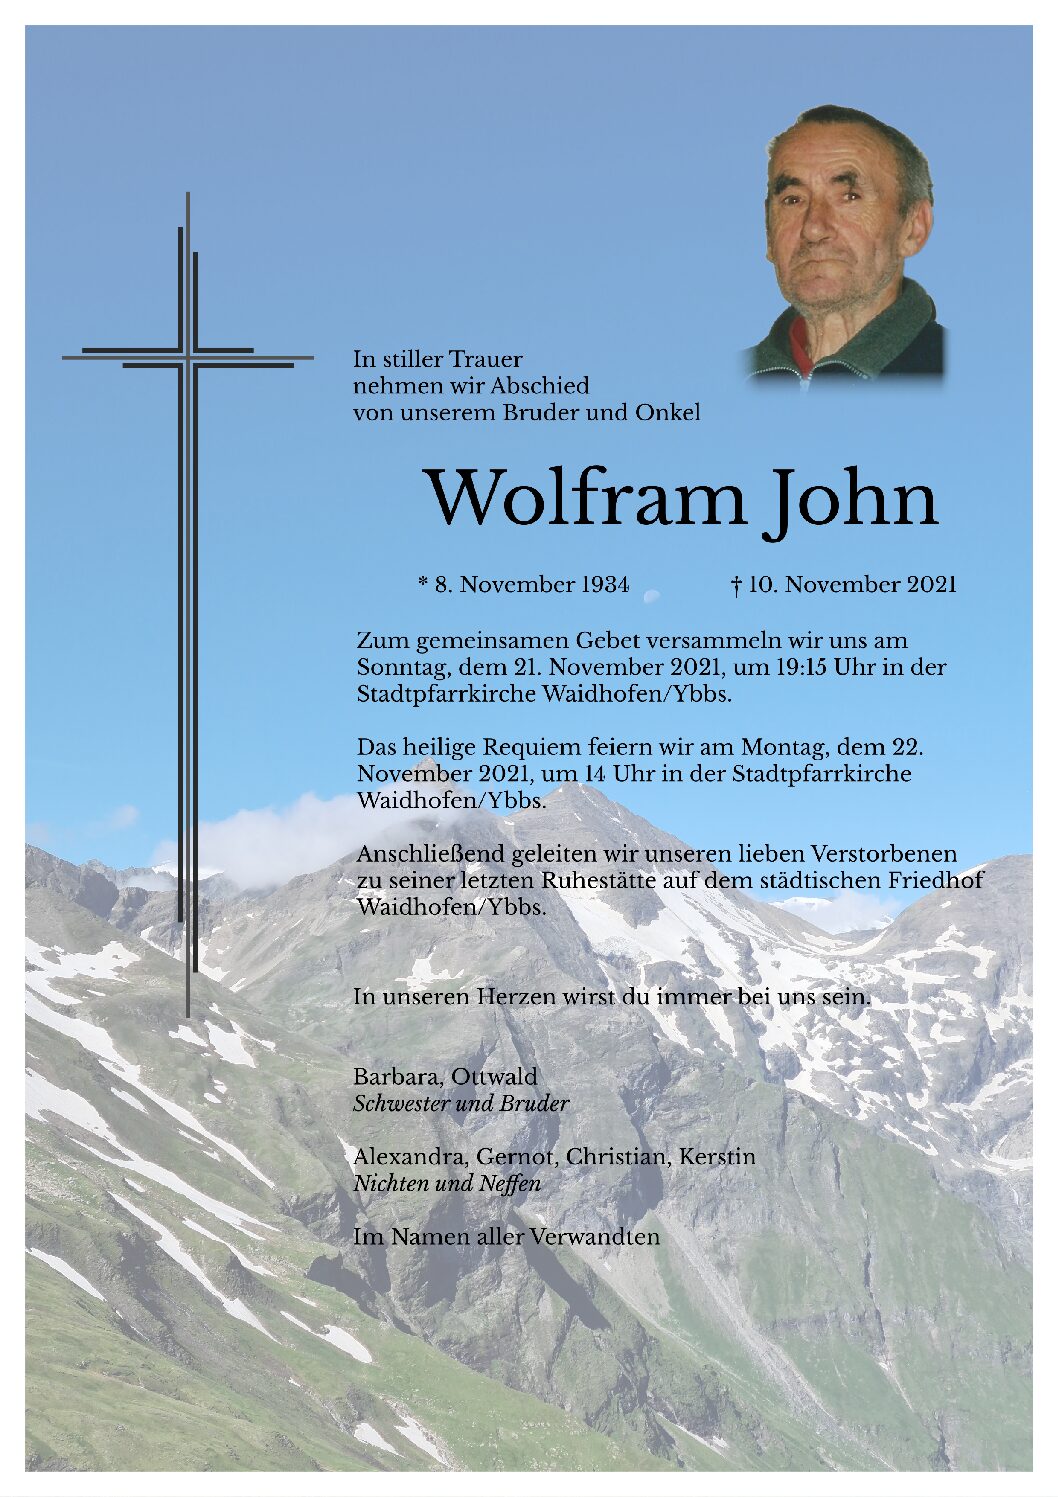 Wolfram John